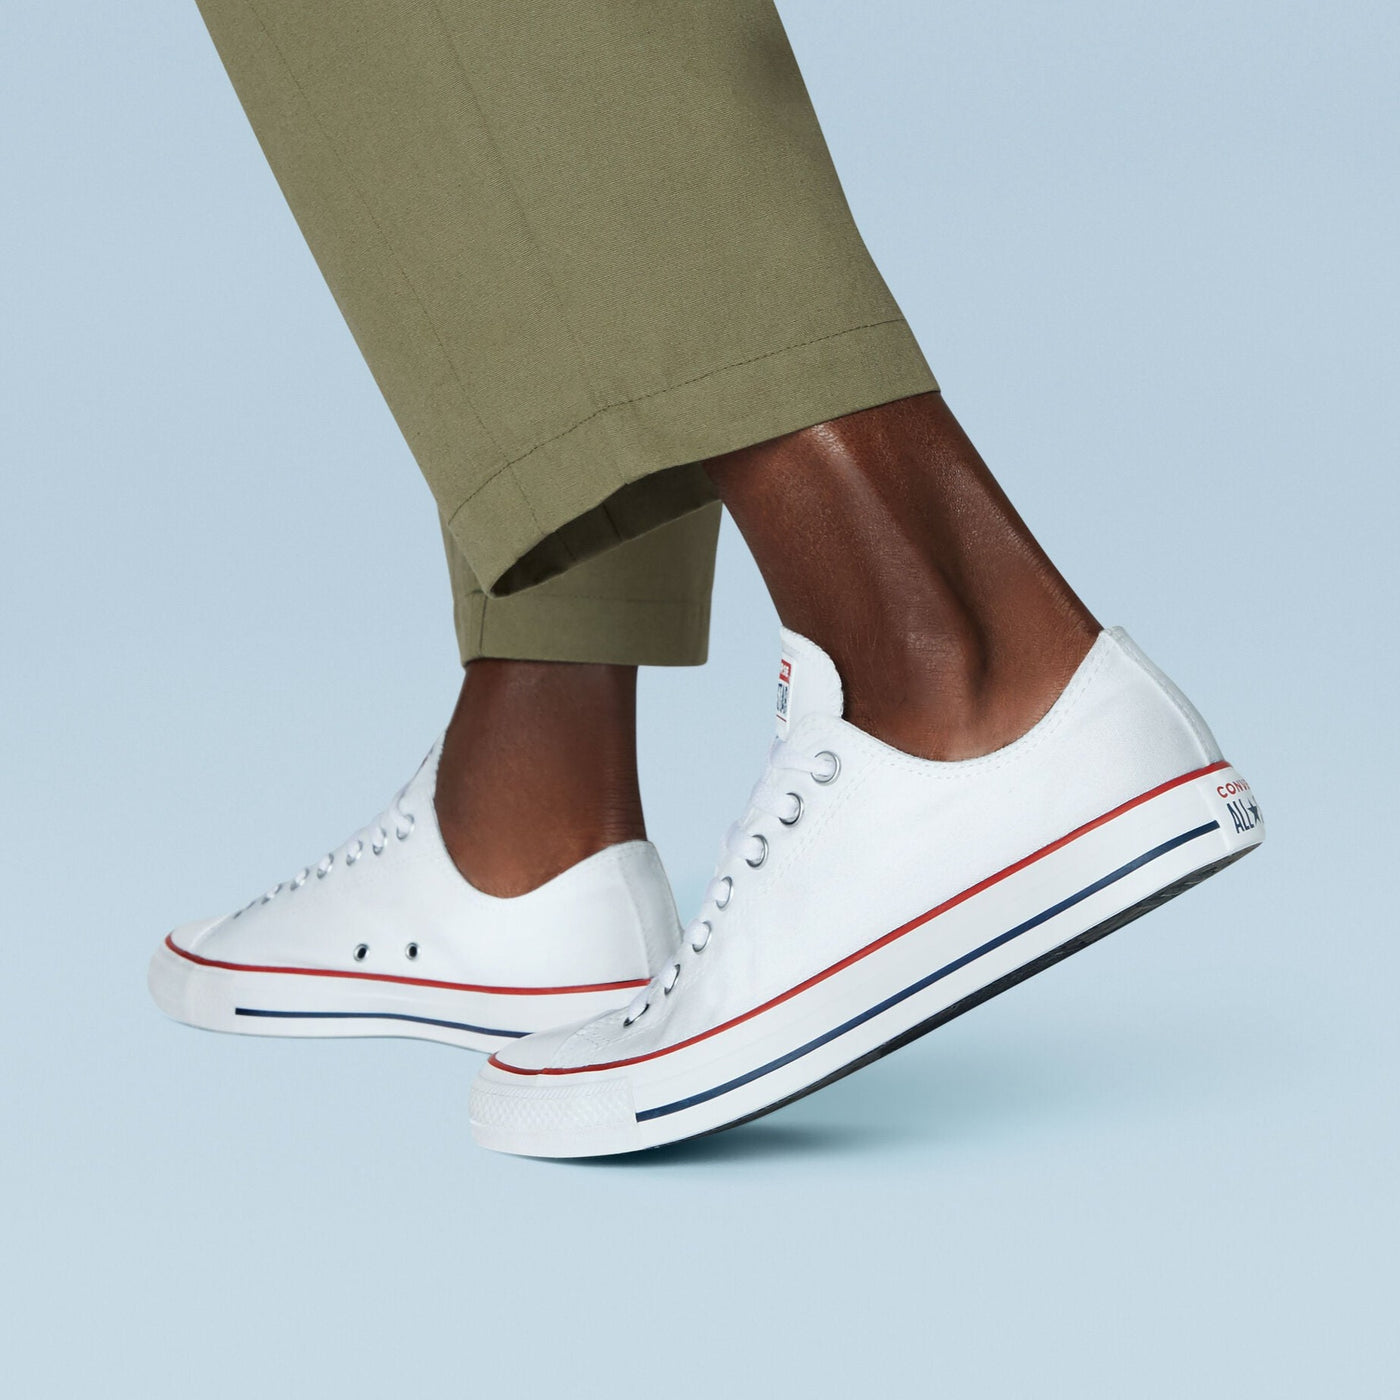 Amazon.com | Converse Optical White M7650 - HI TOP Size 8 M US Women / 6 M  US Men | Fashion Sneakers